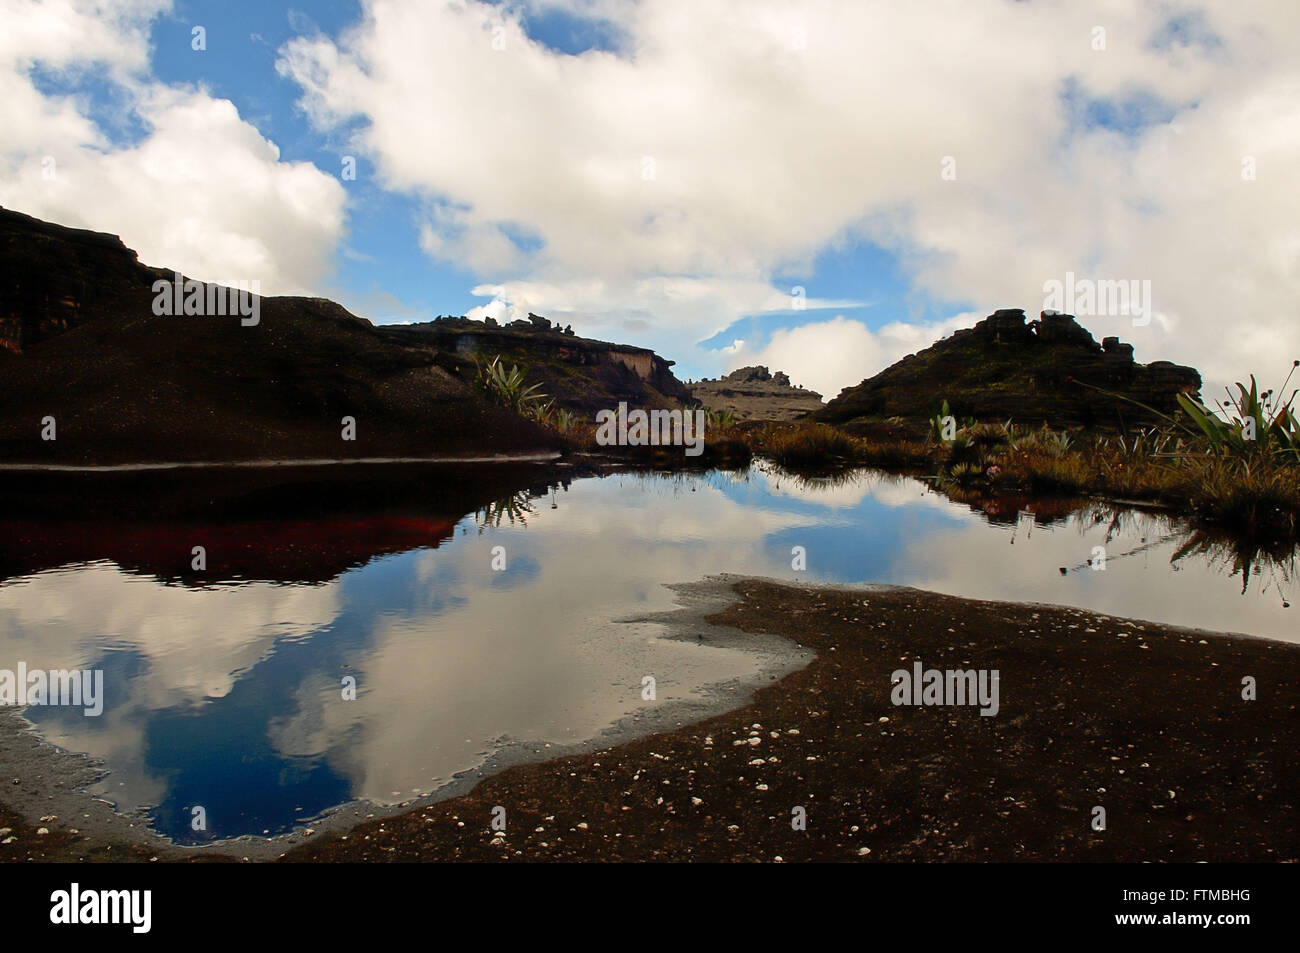 Seen, die durch Regen in Plato Mount Roraima - Brasilien - Venezuela - Grenze Guyana gebildet Stockfoto